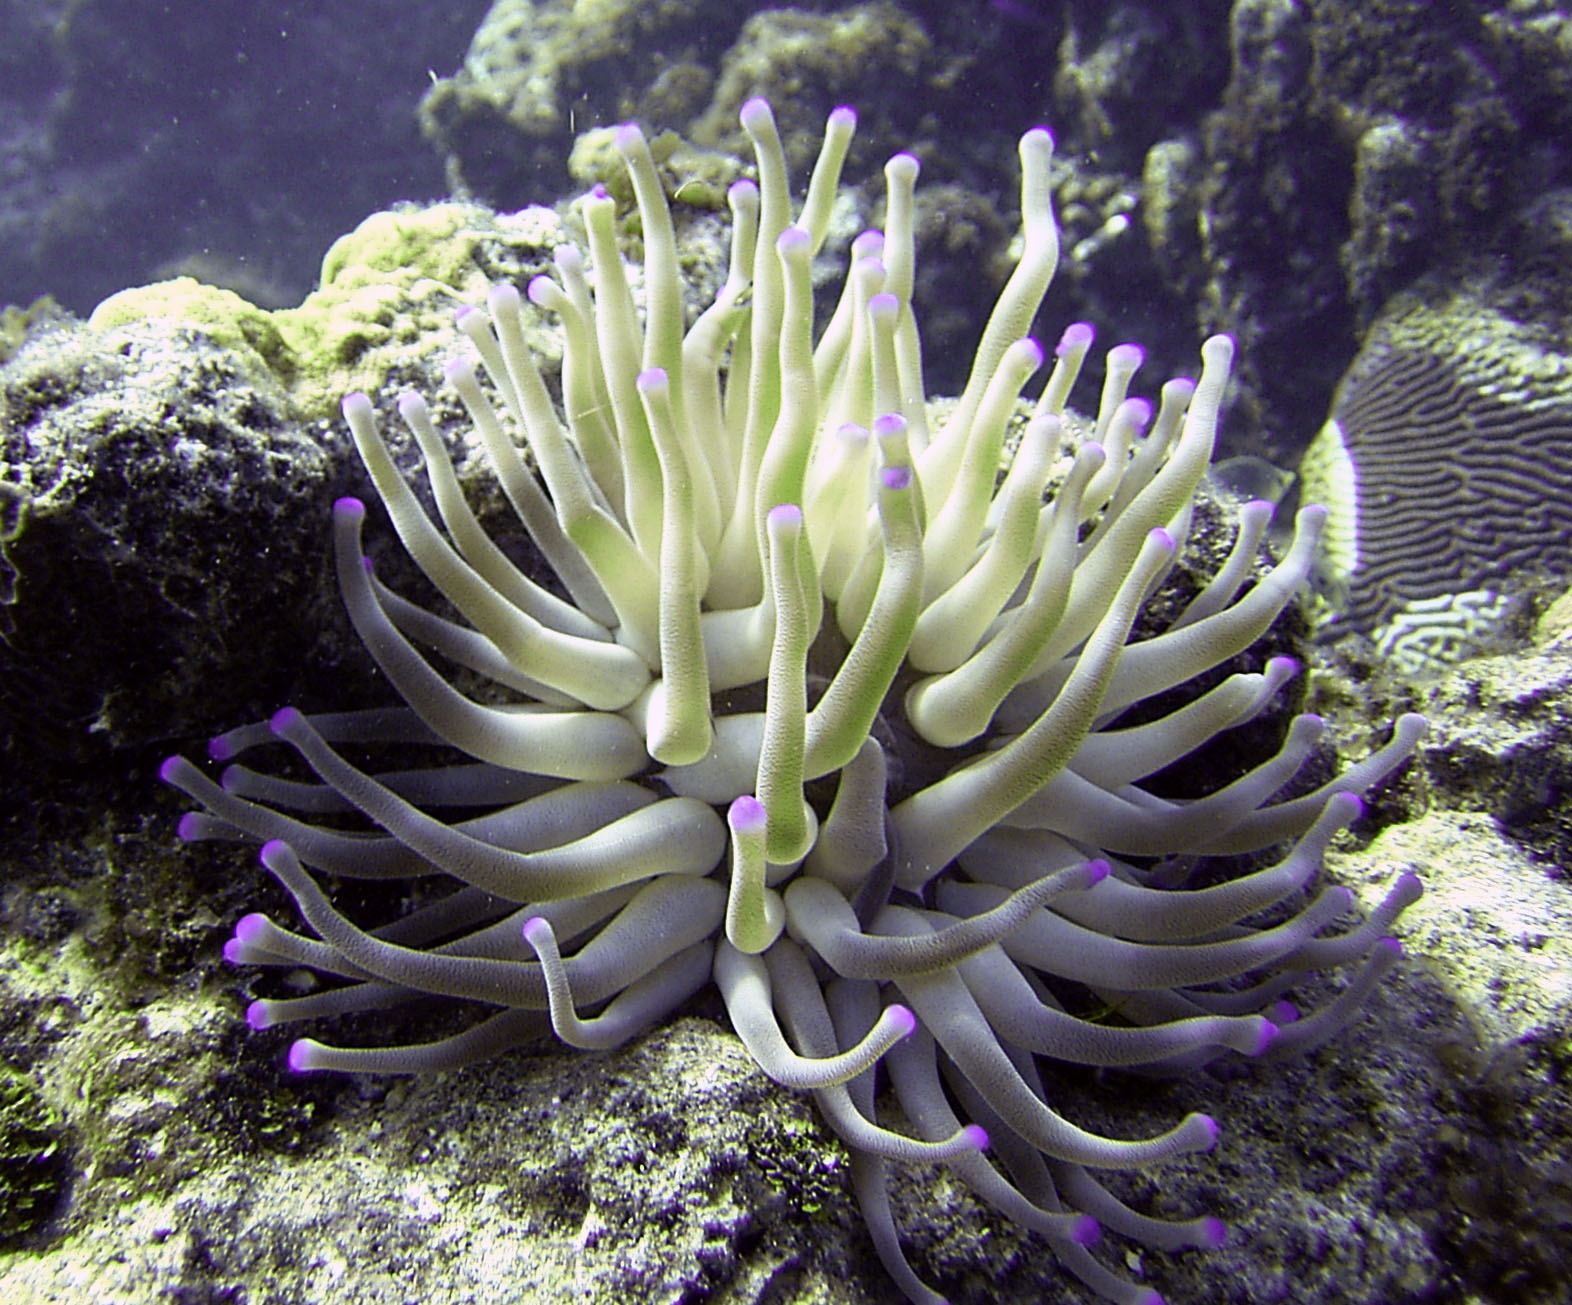 Grand_Cayman_anemone1